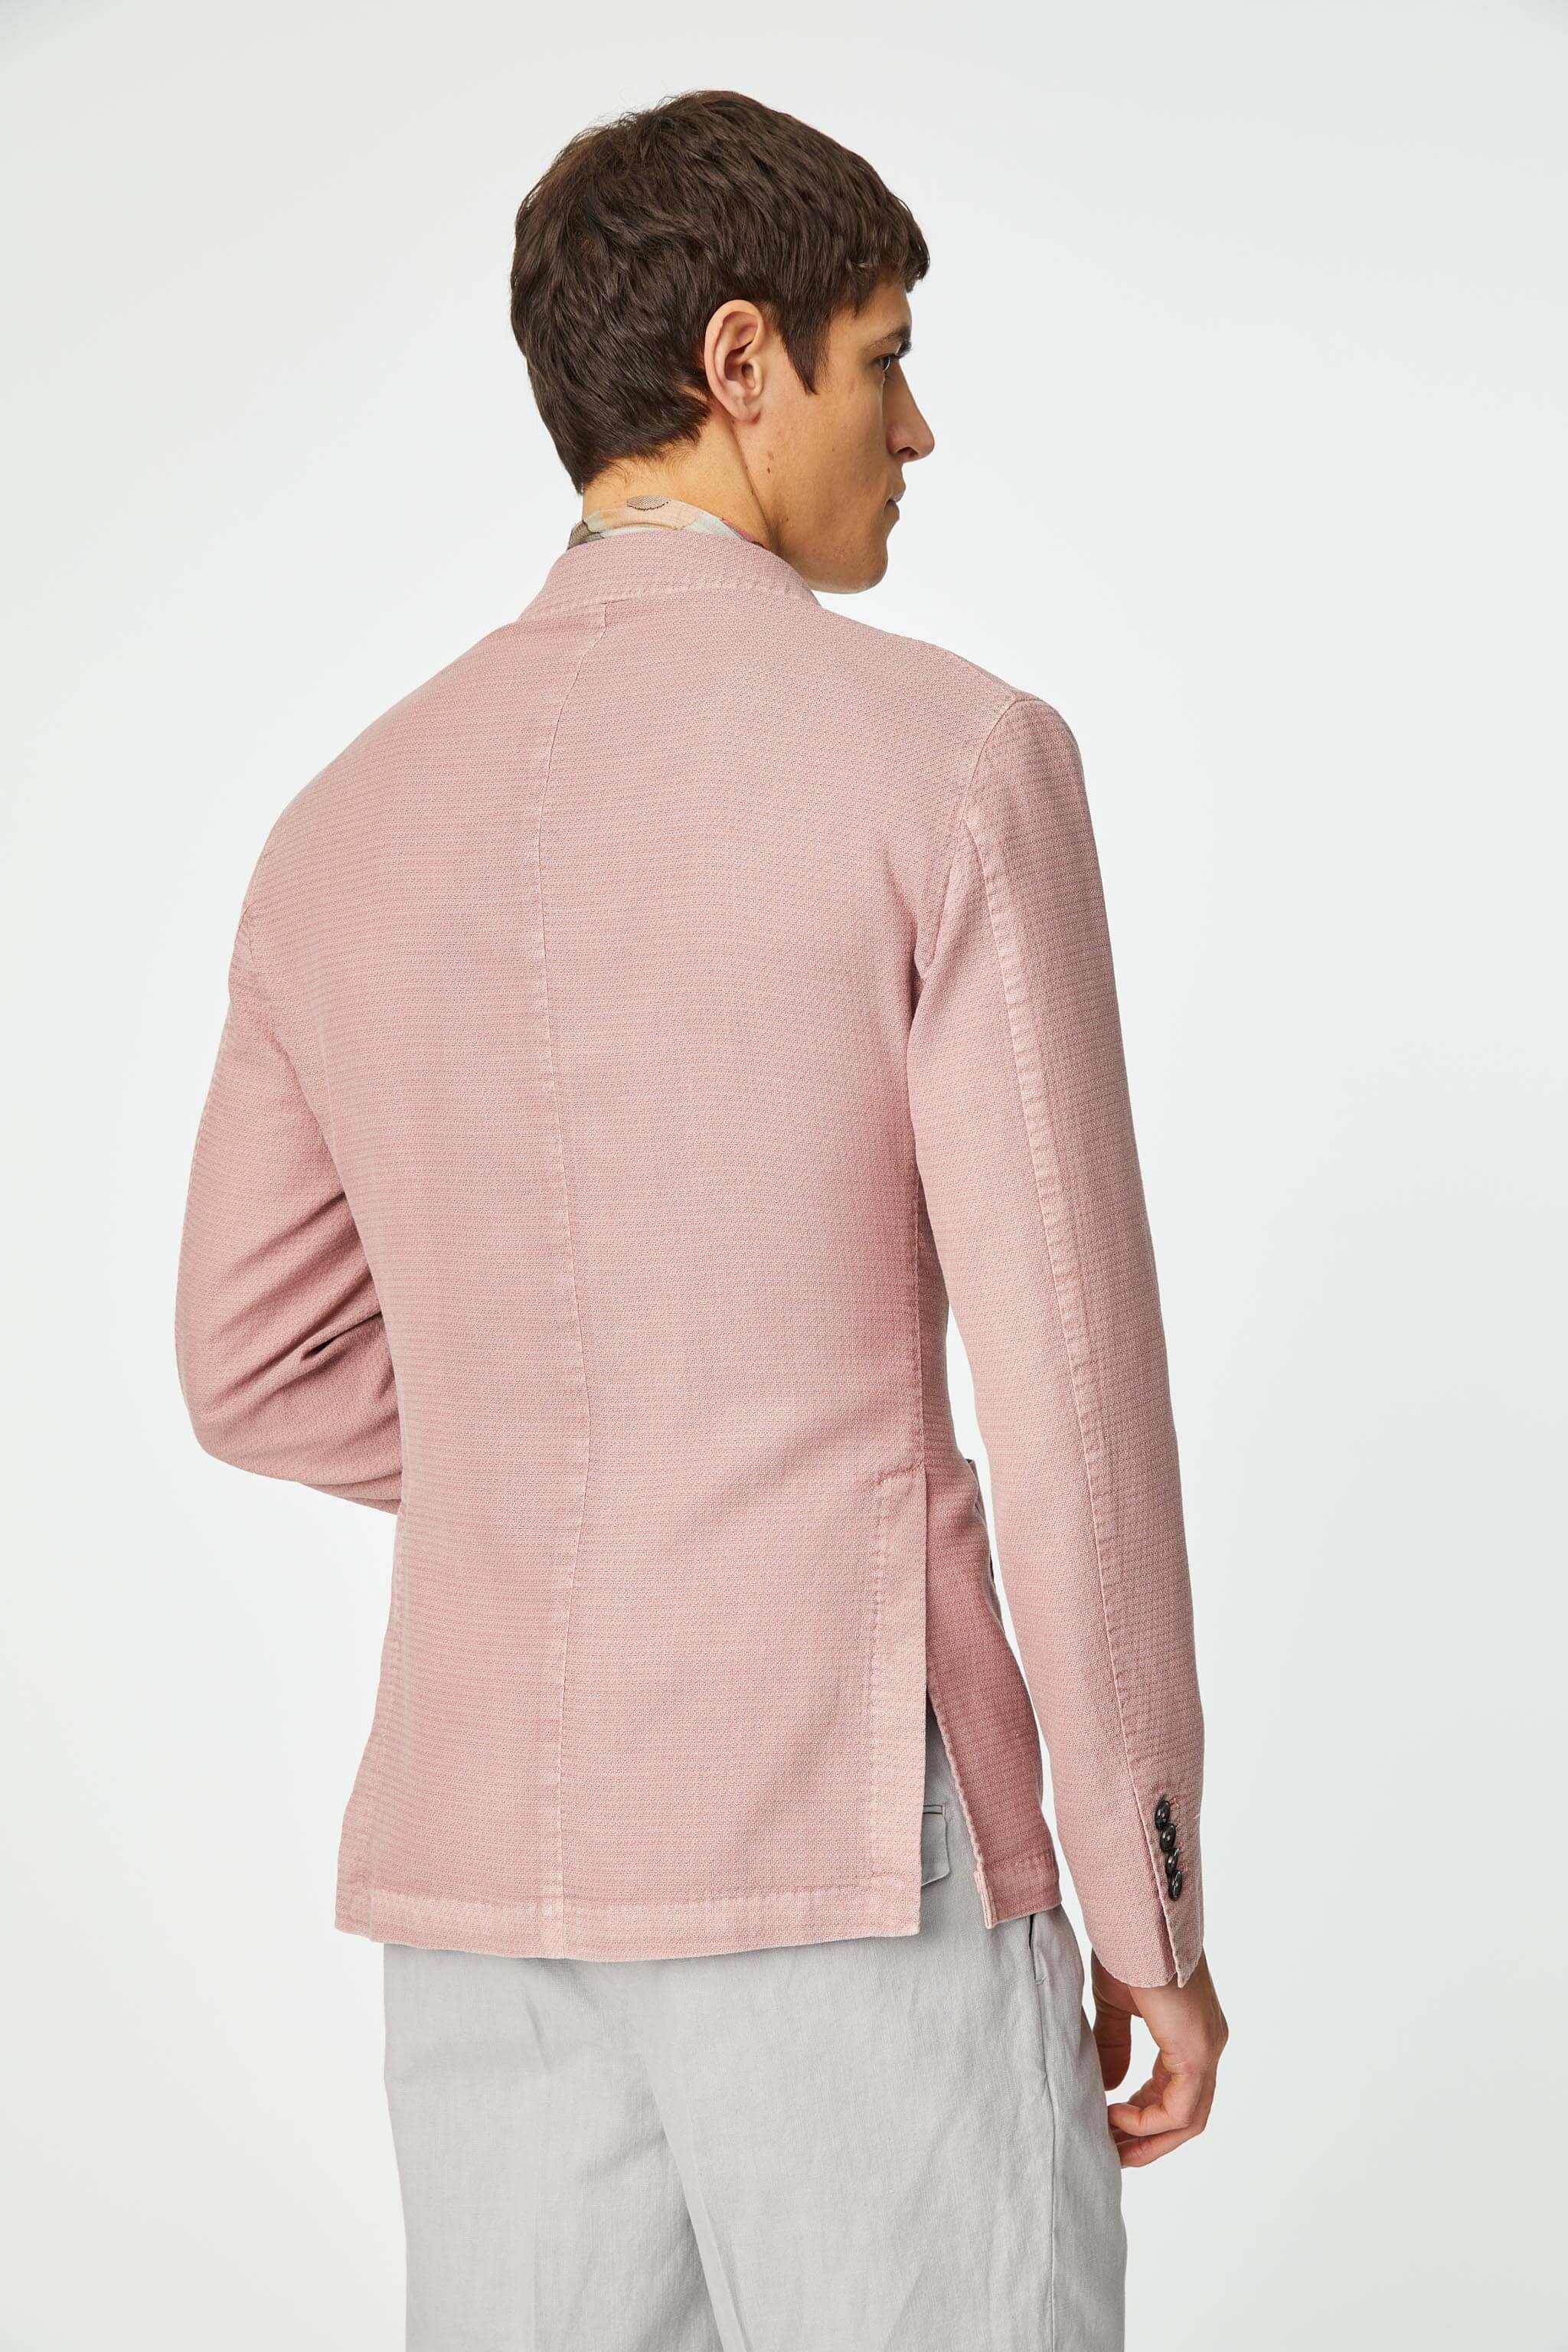 Garment-dyed JACK jacket in pink